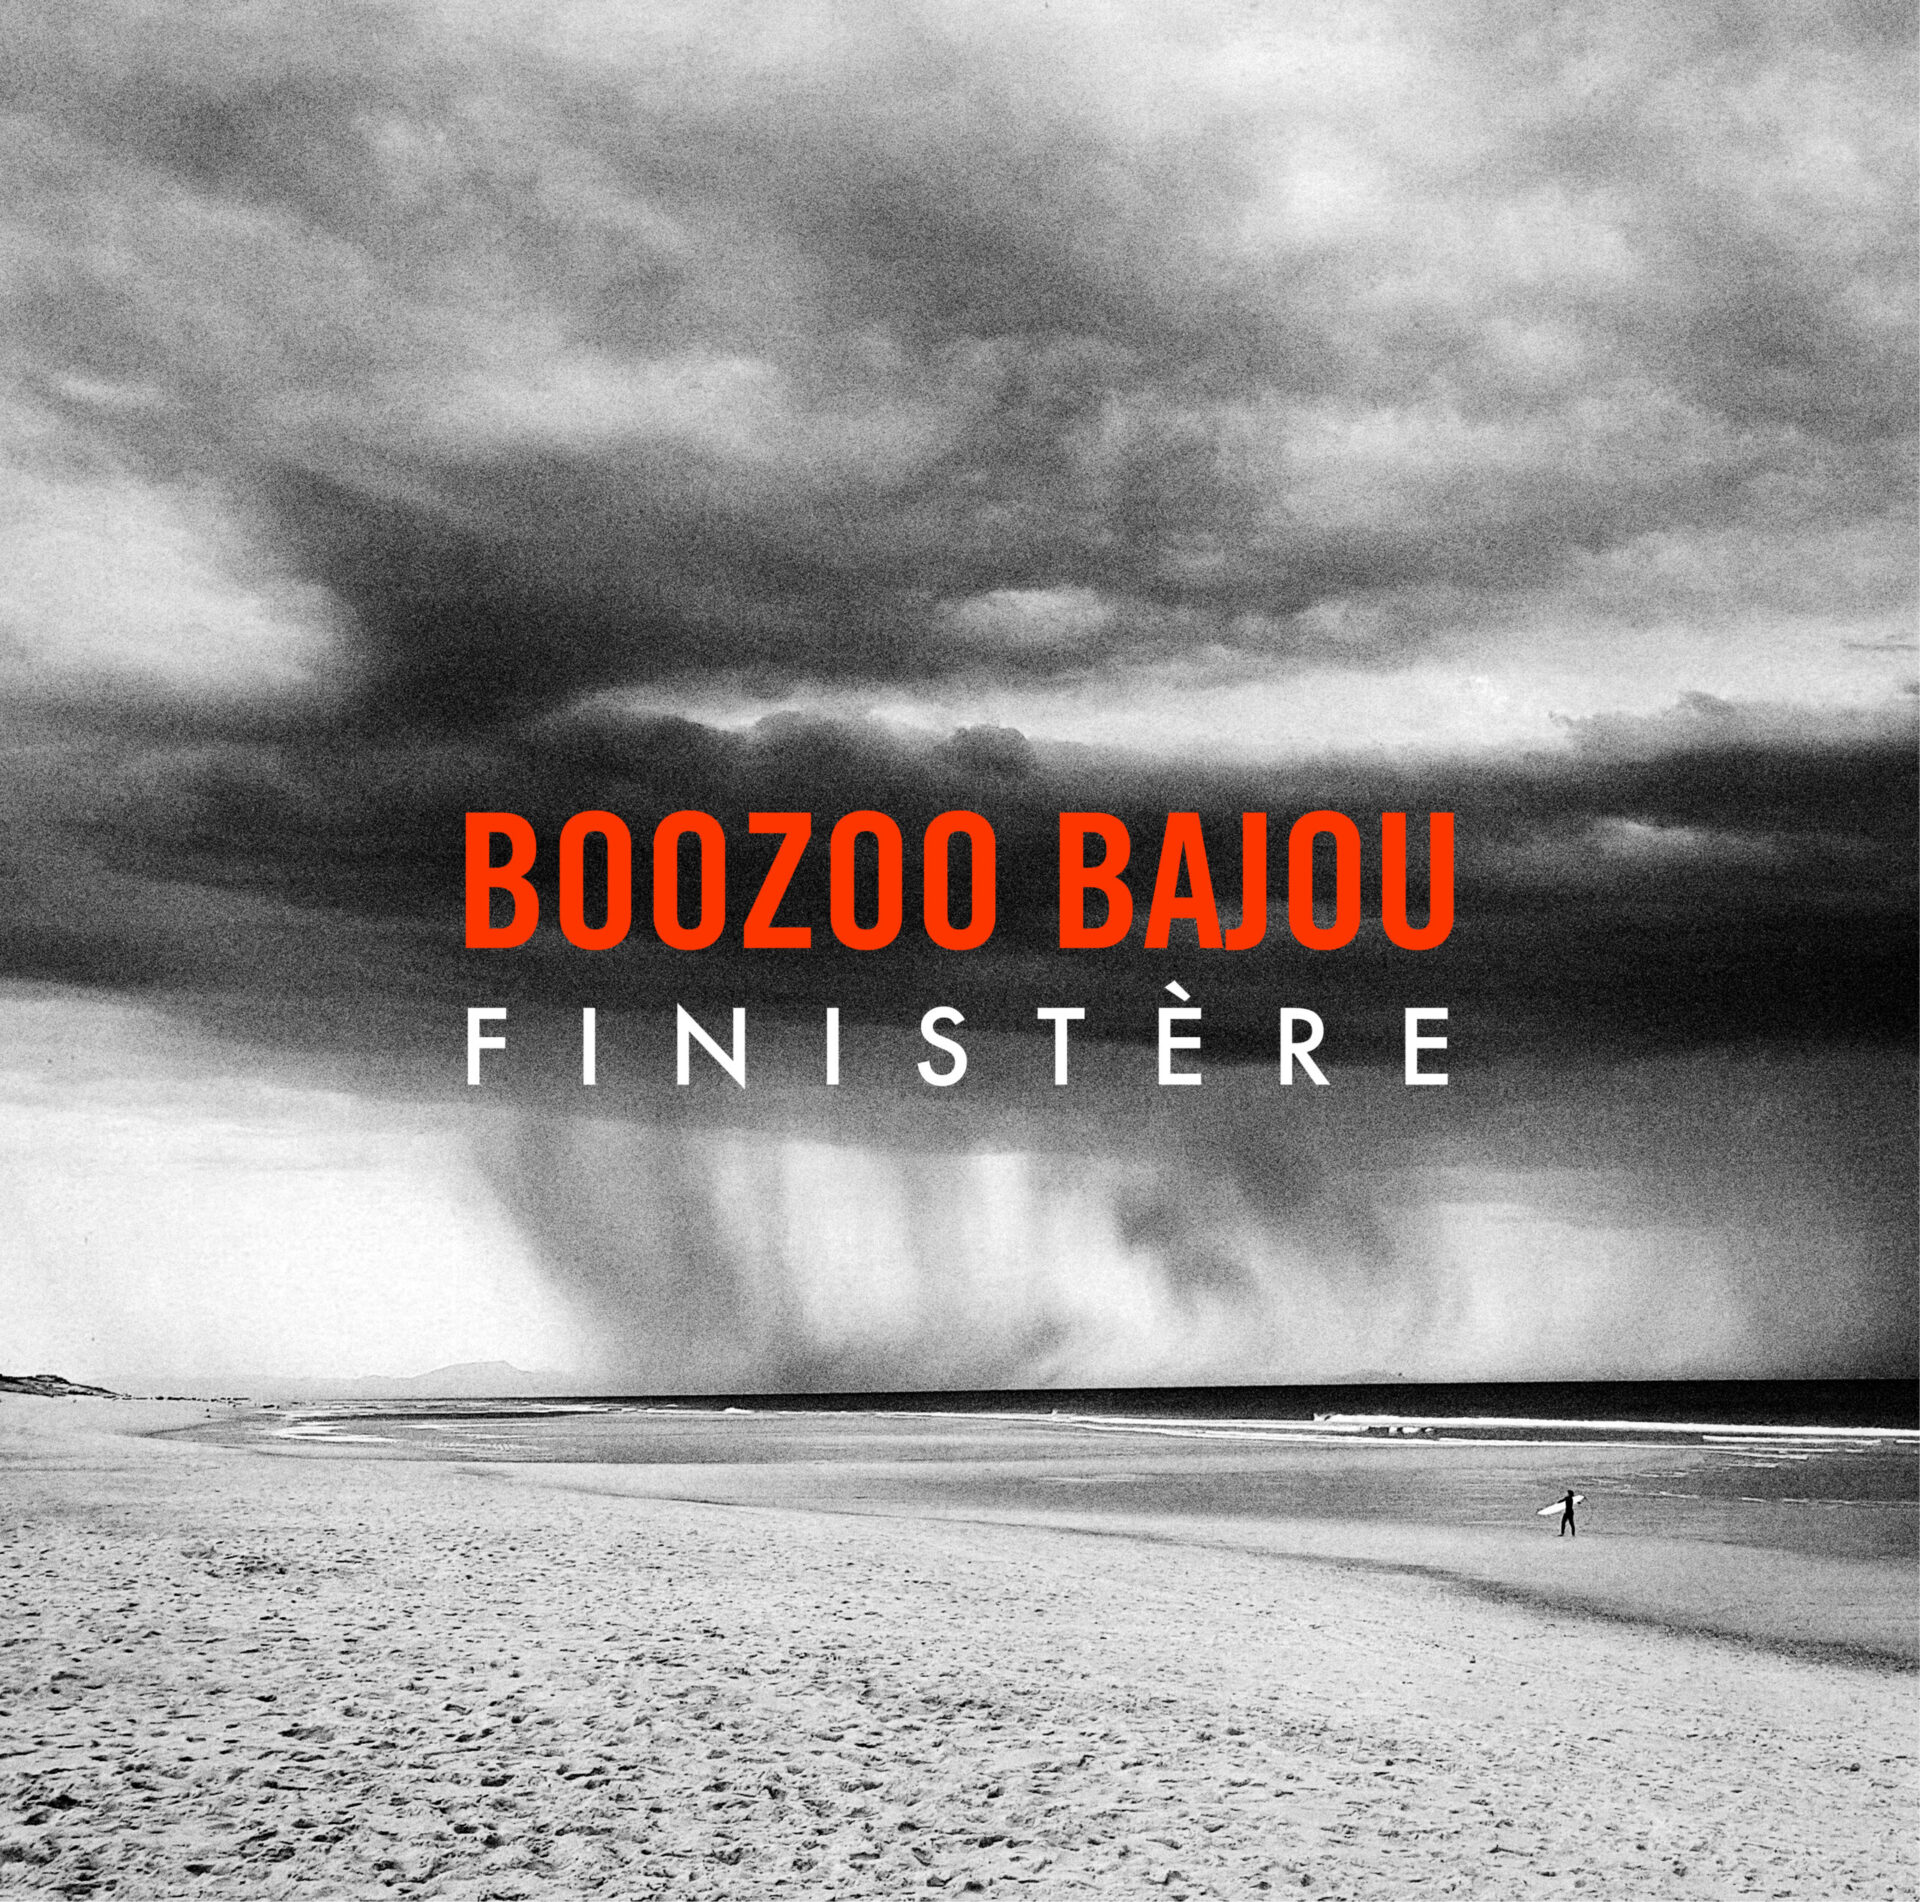 (c) Boozoobajou.com